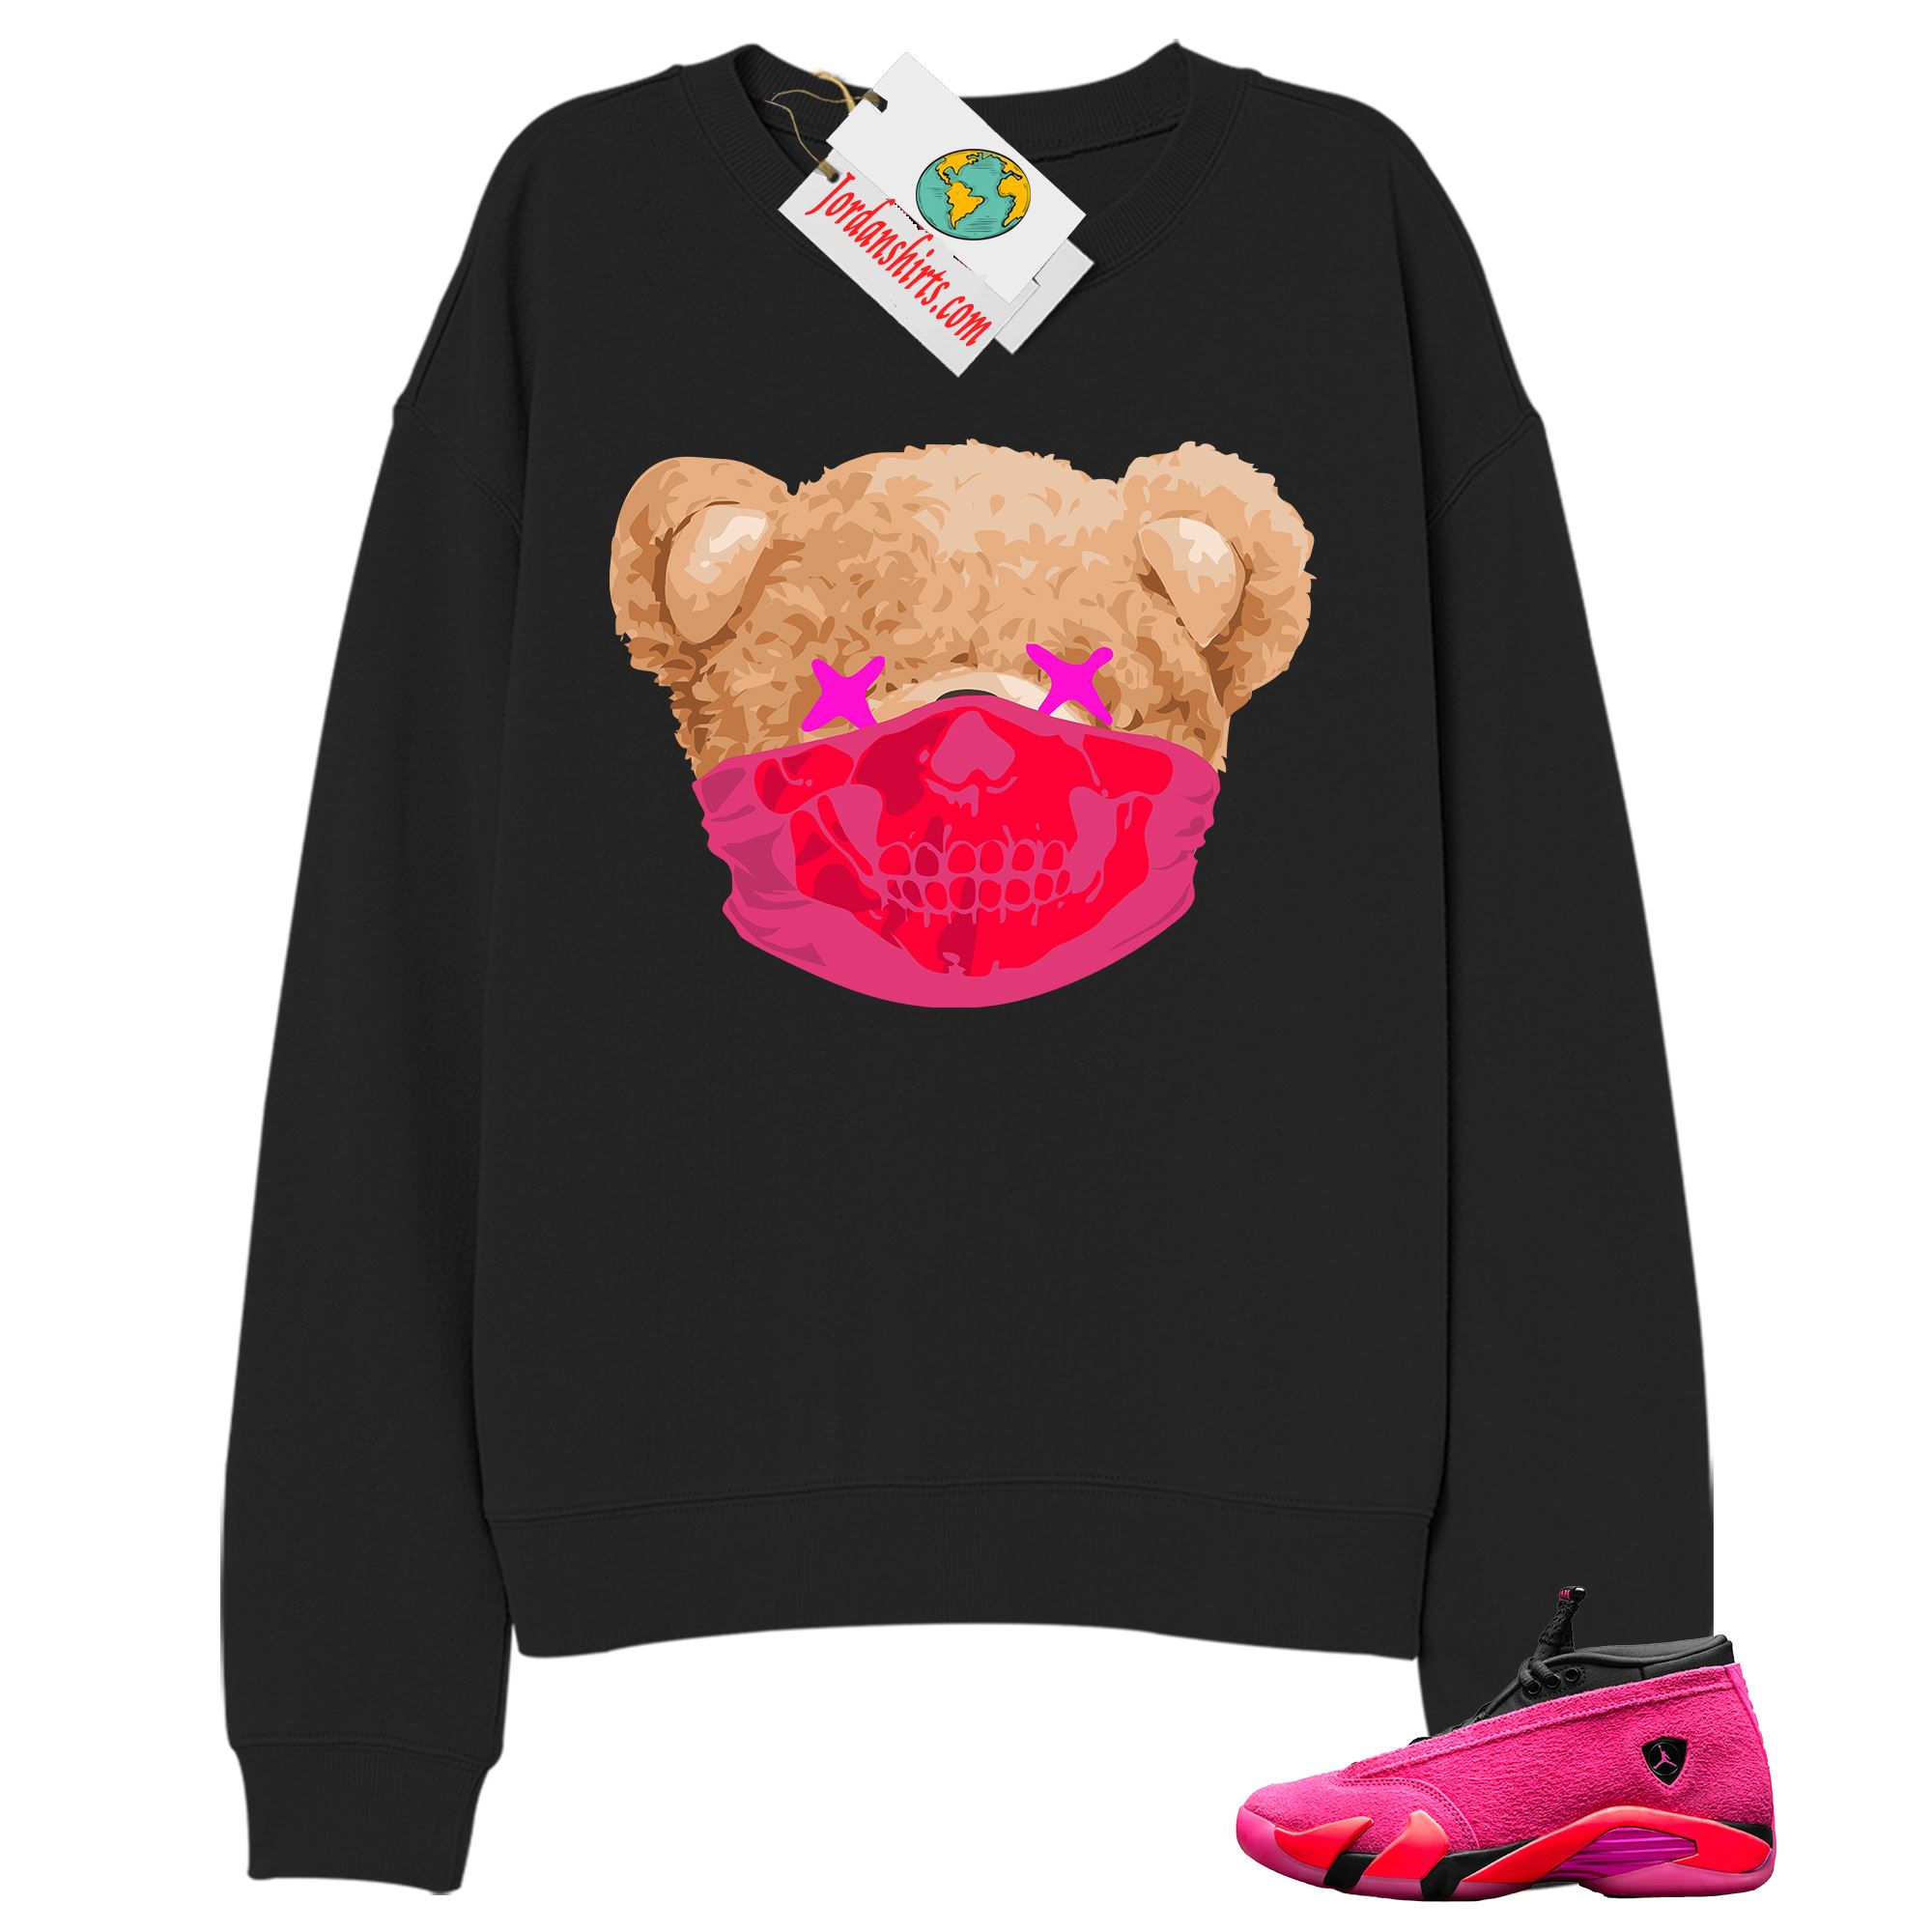 Jordan 14 Sweatshirt, Teddy Bear Skull Bandana Black Sweatshirt Air Jordan 14 Wmns Shocking Pink 14s Size Up To 5xl